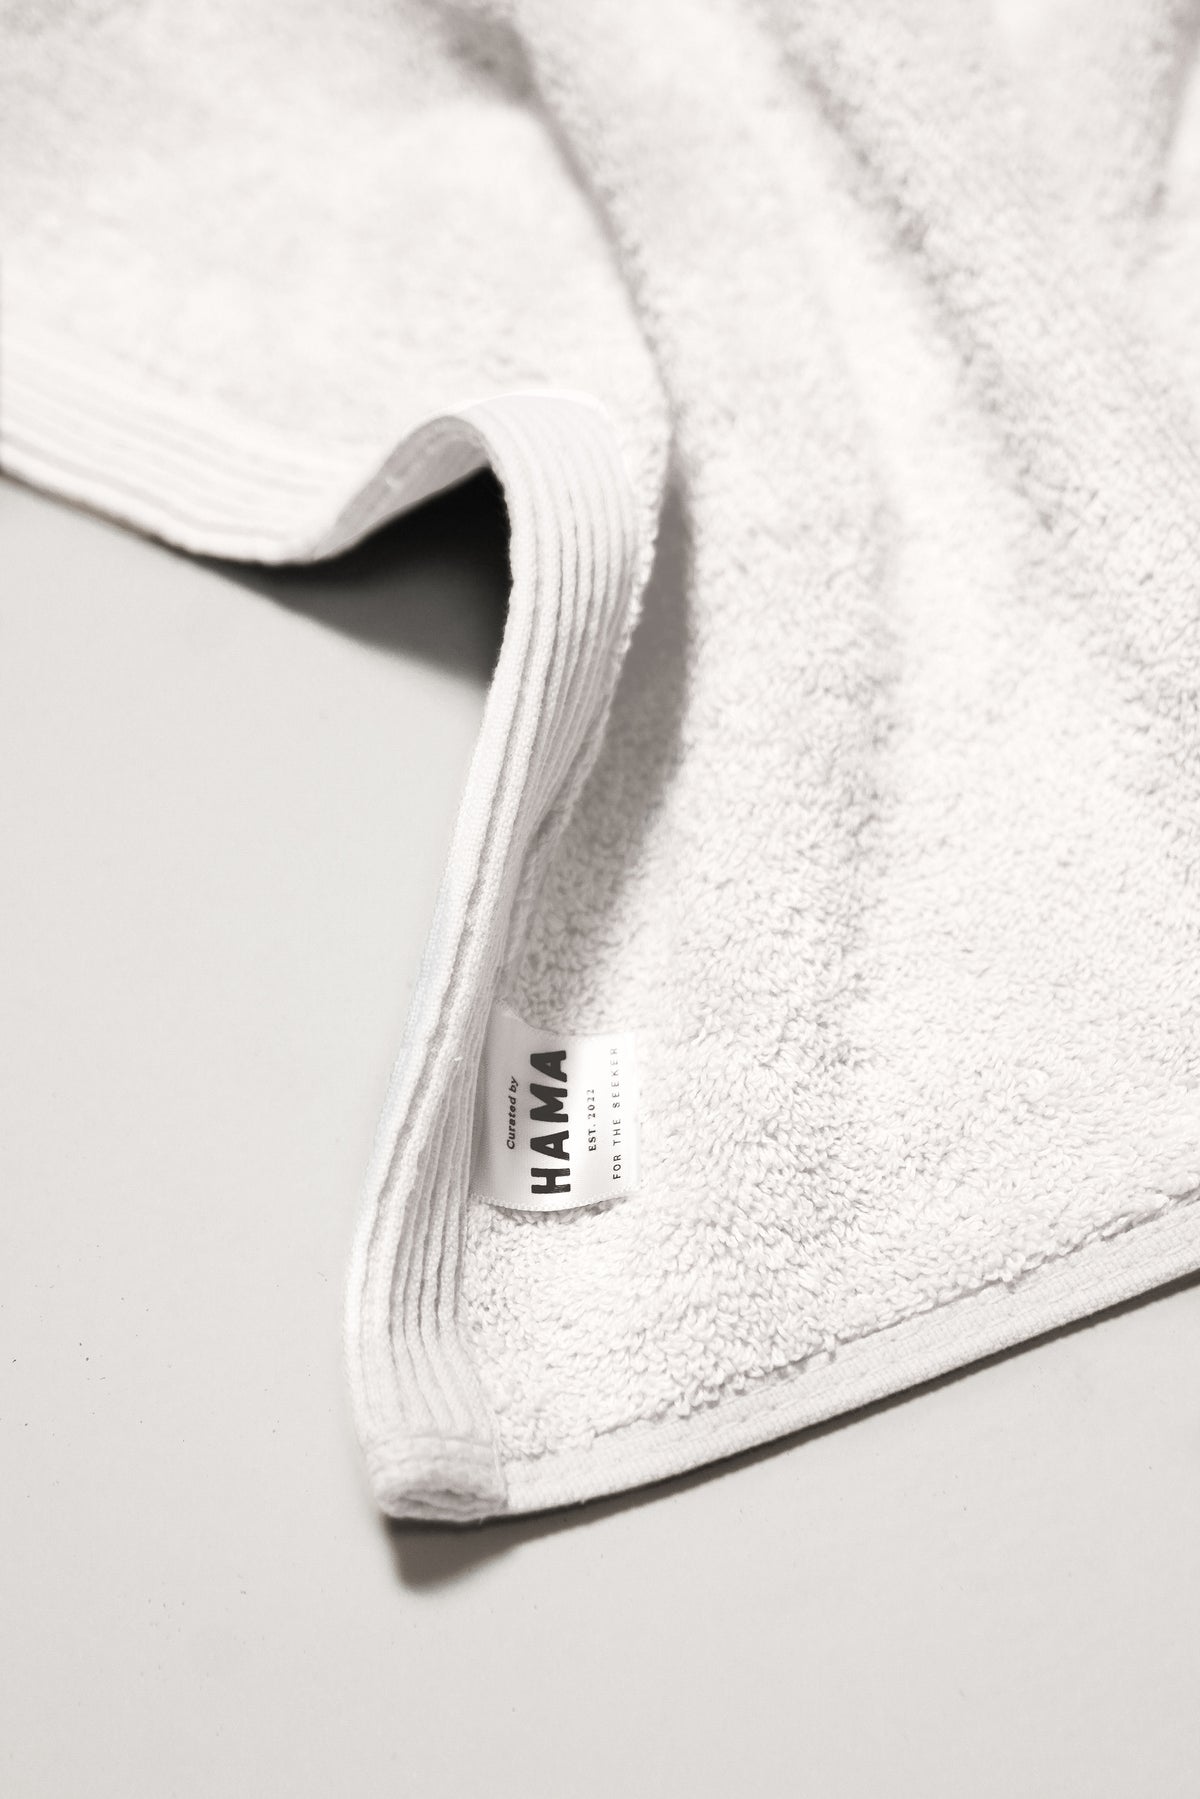 Seine, Bordered Cotton Towel Set in White